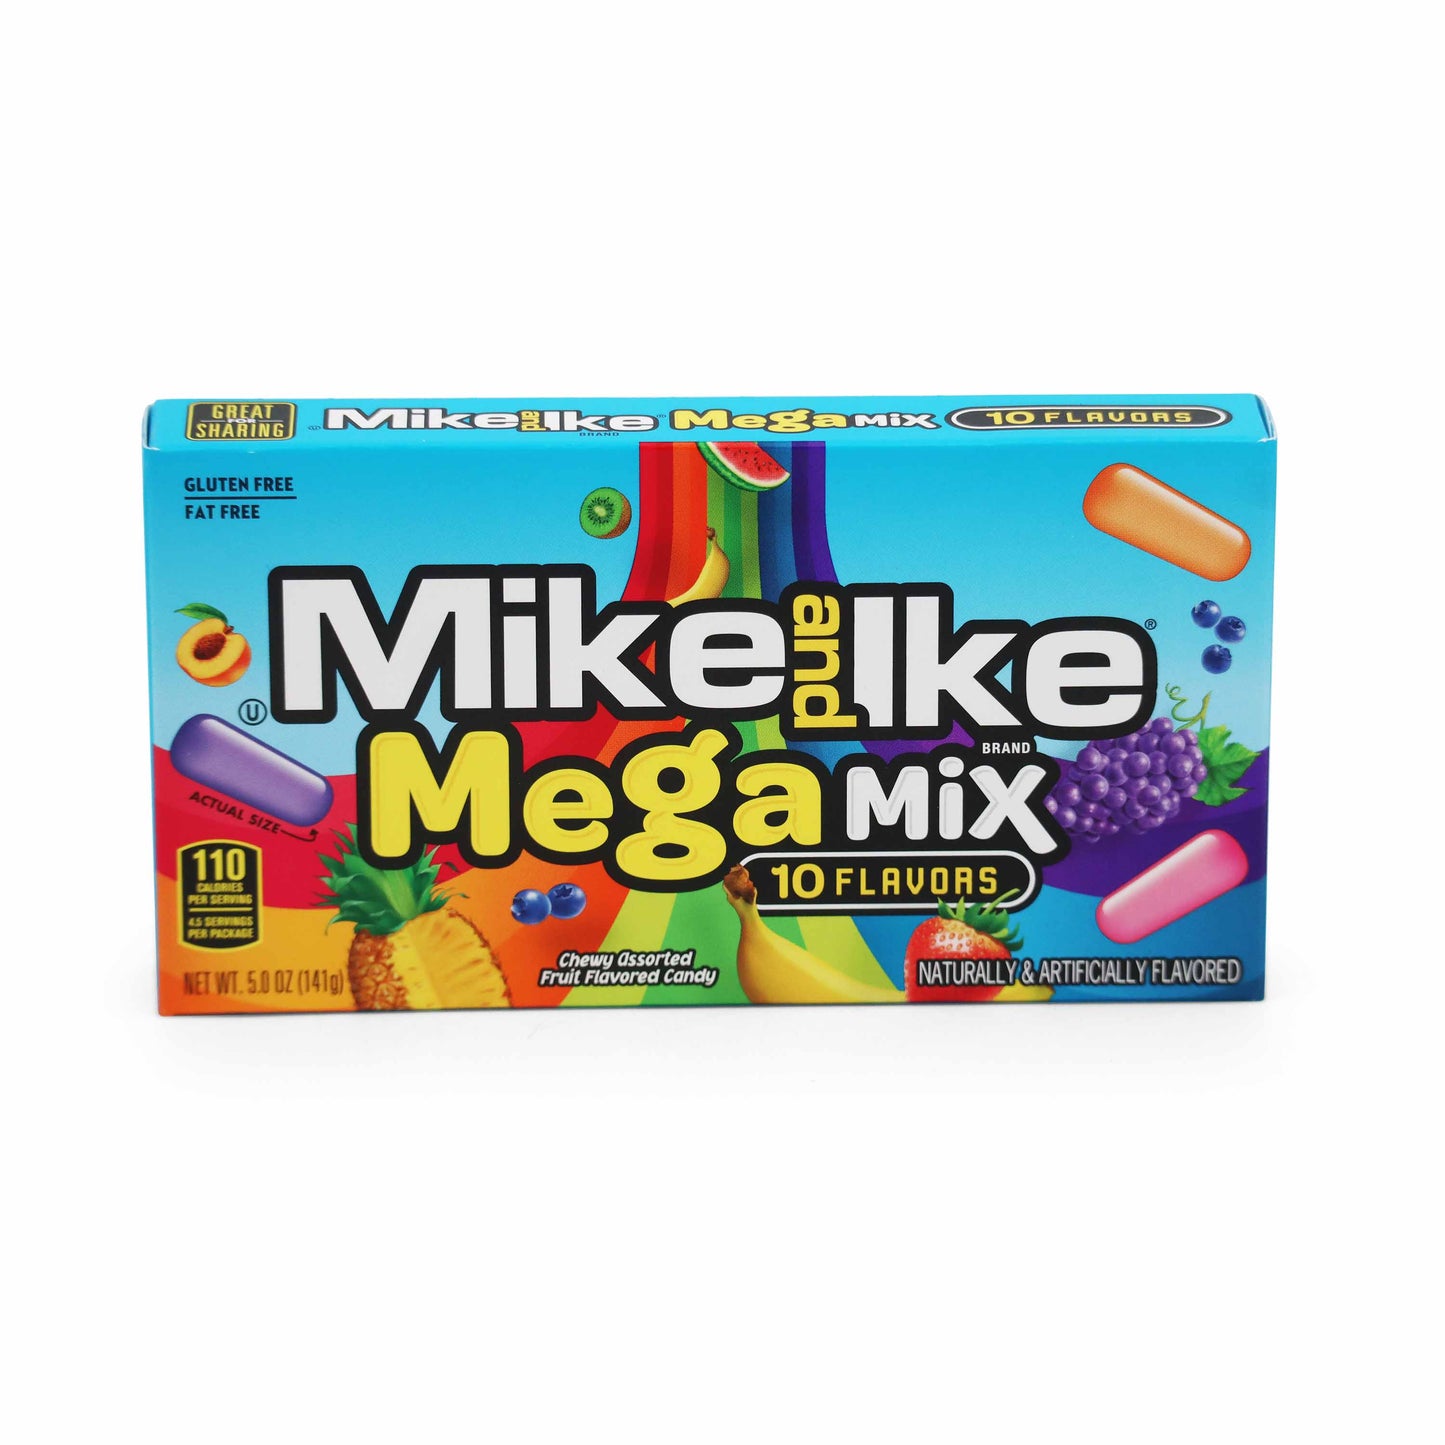 Mike and Ike - Mega Mix 10 Fruits (141g)